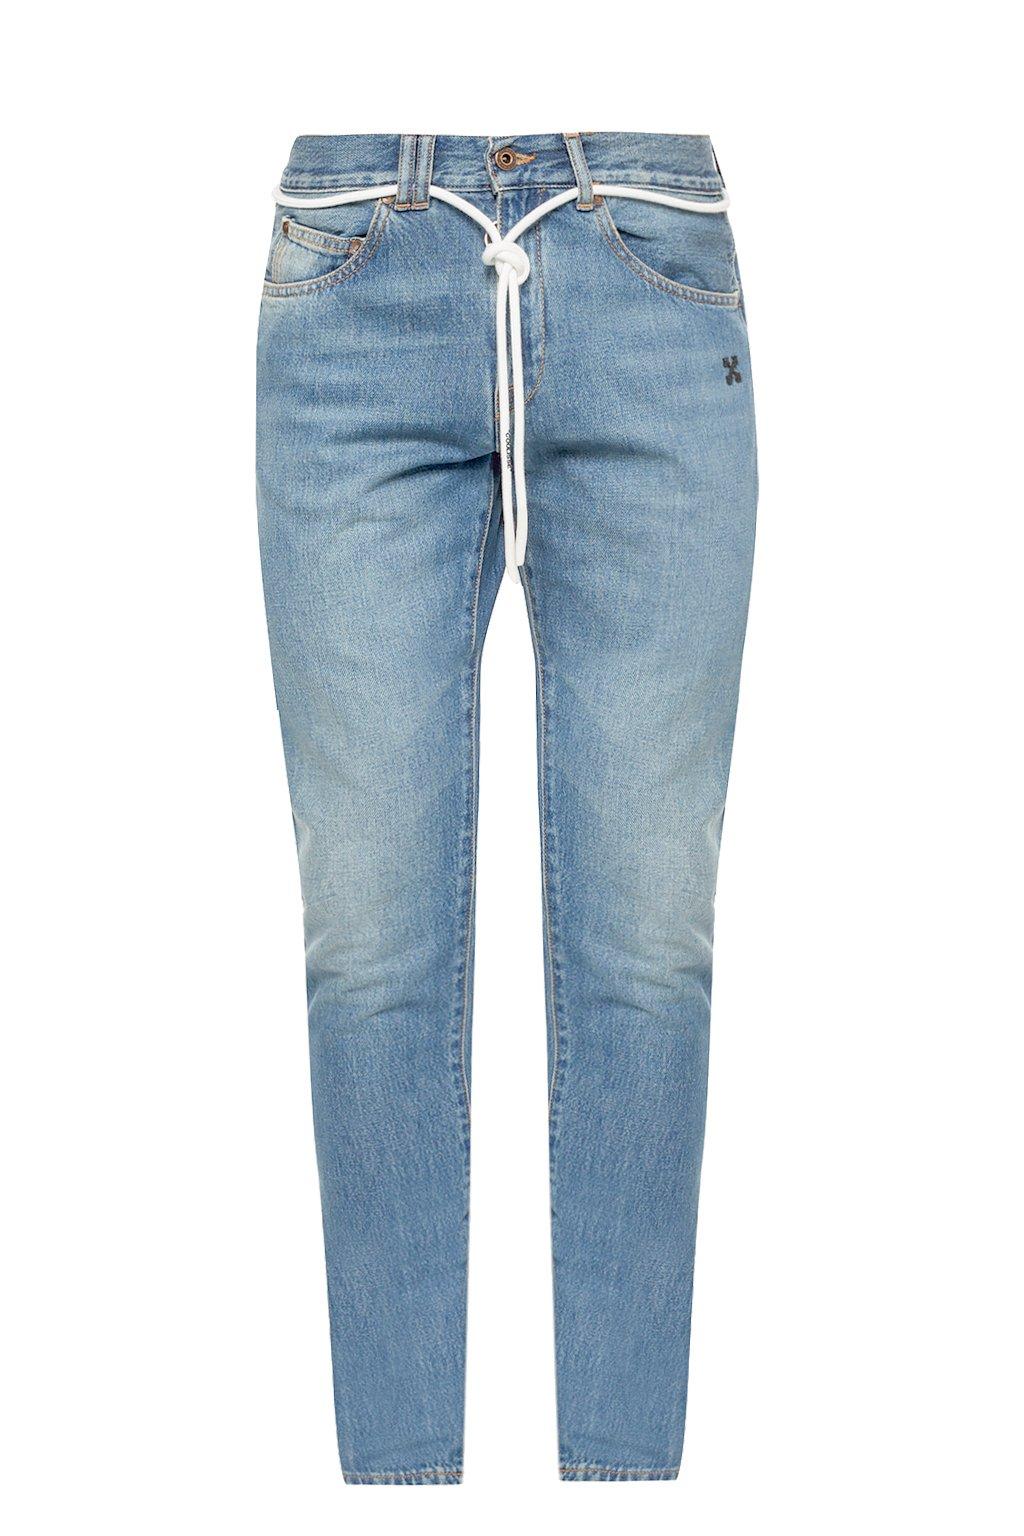 Off-White c/o Virgil Abloh Denim Striped Jeans in Blue for Men - Lyst